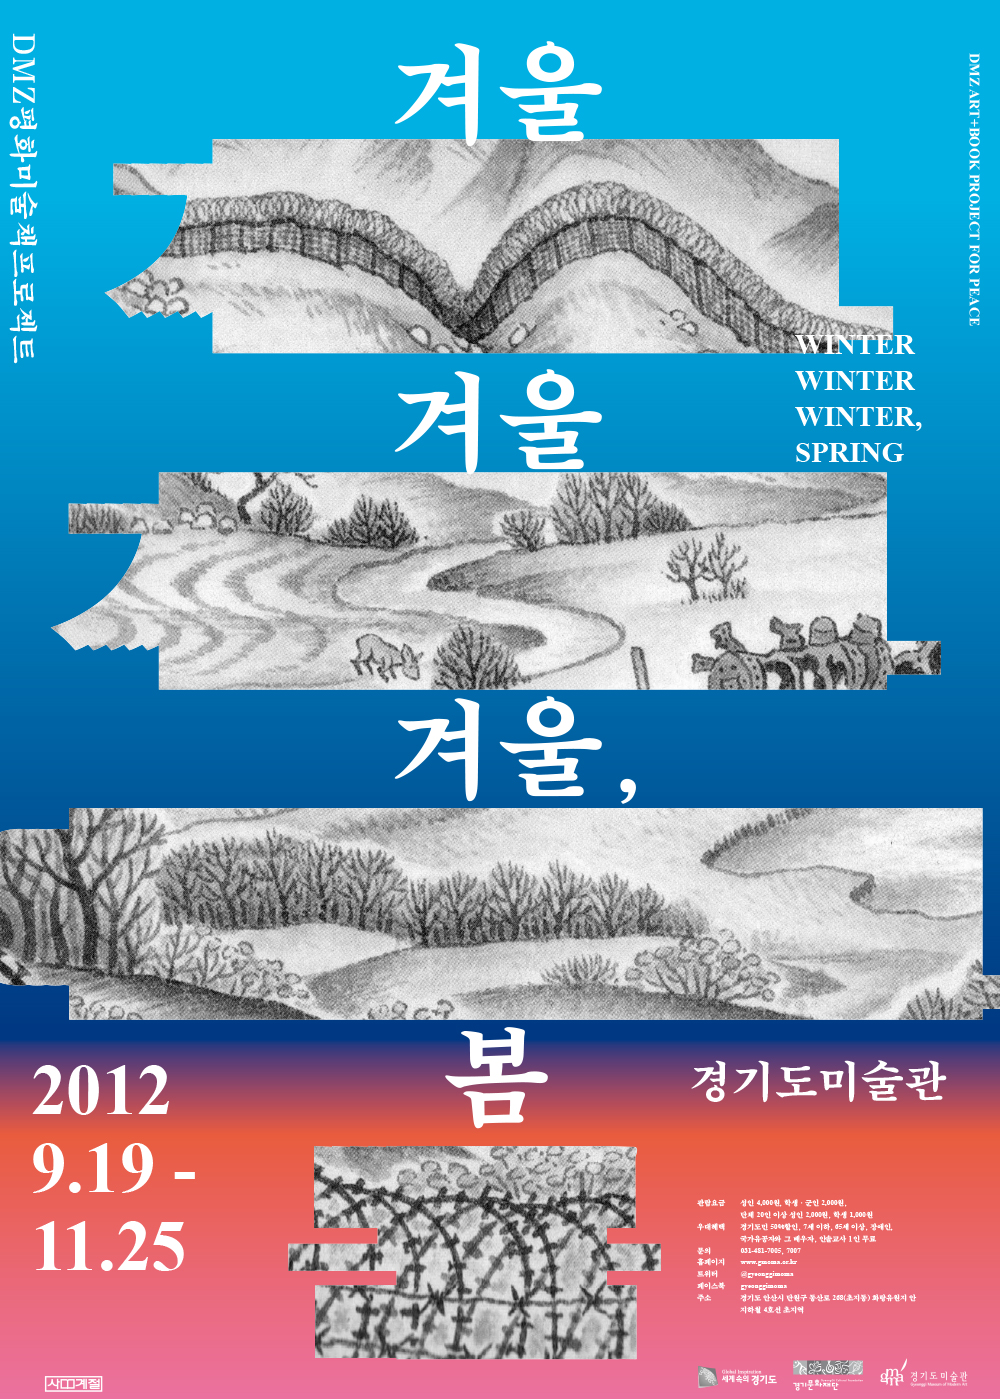 DMZ Peace Picture Book Project_ Winter Winter Winter, Spring